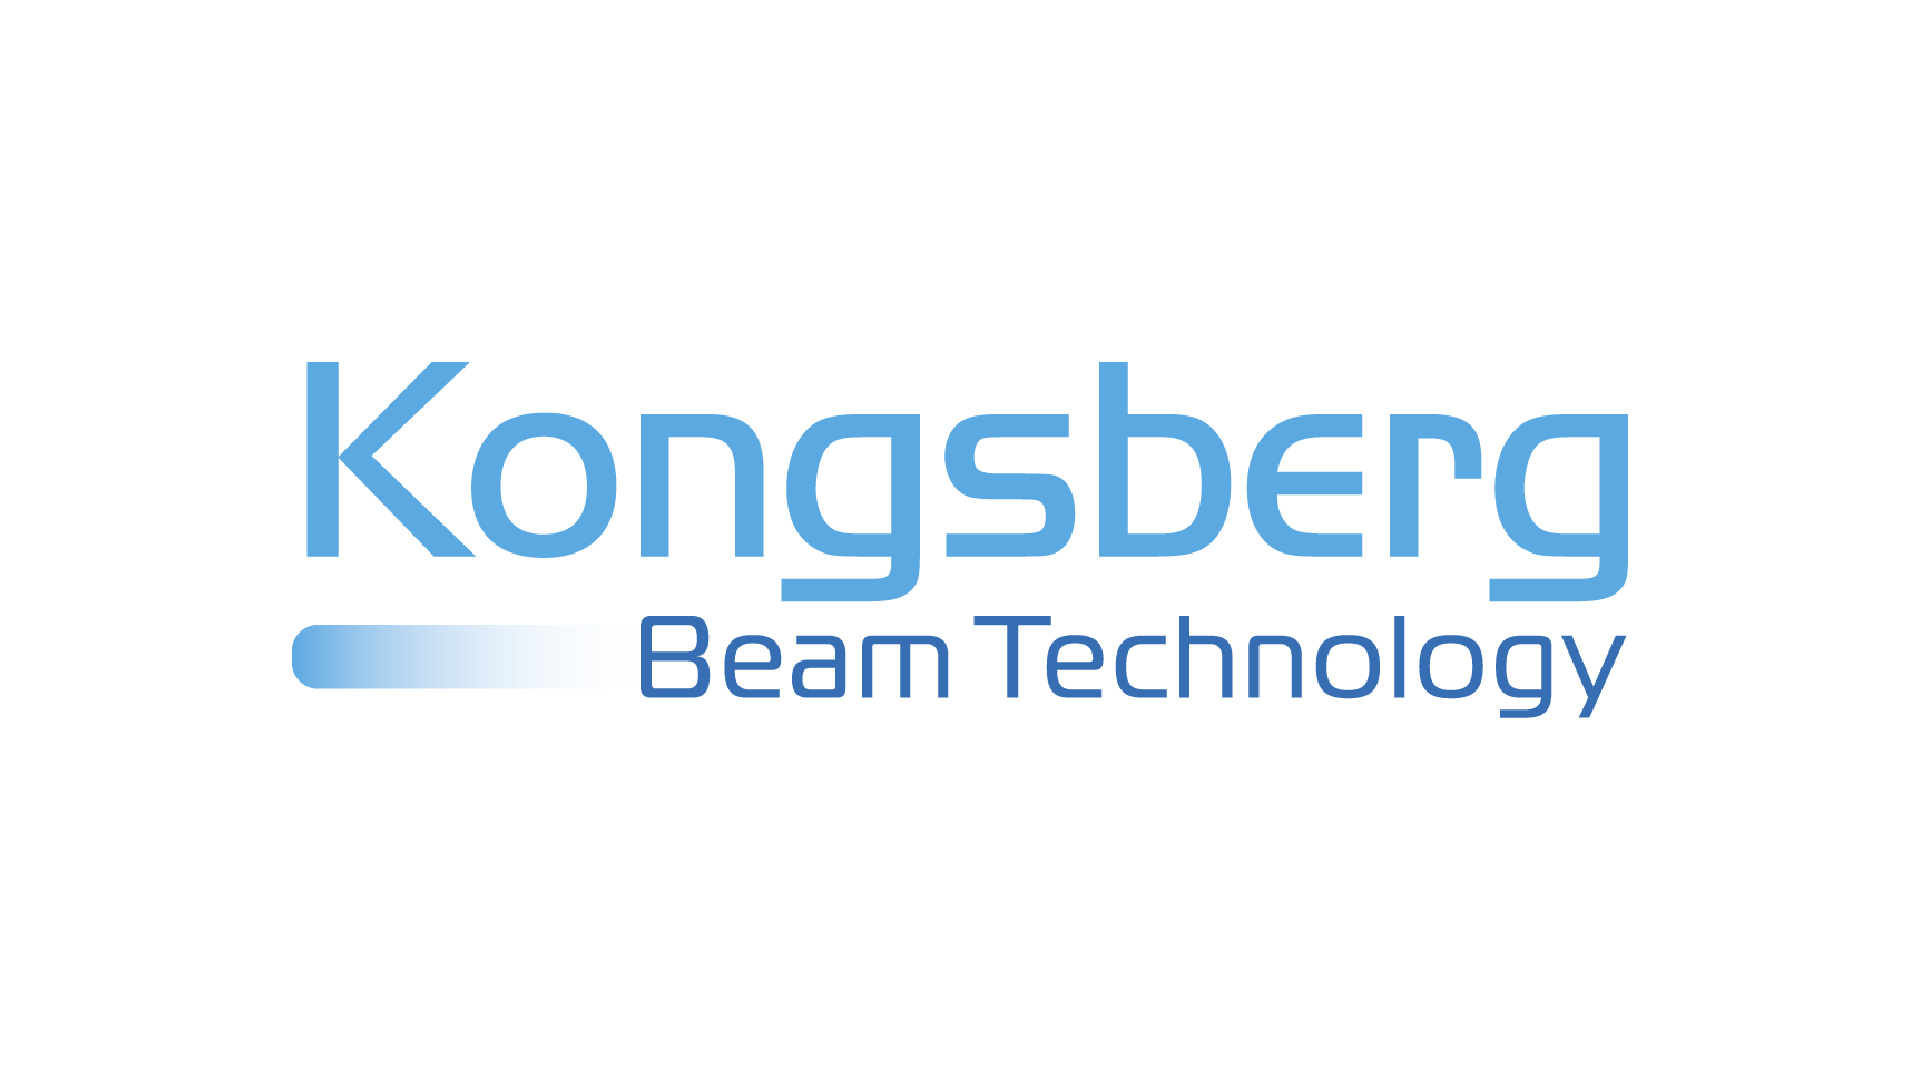 Kongsberg Beam Technology